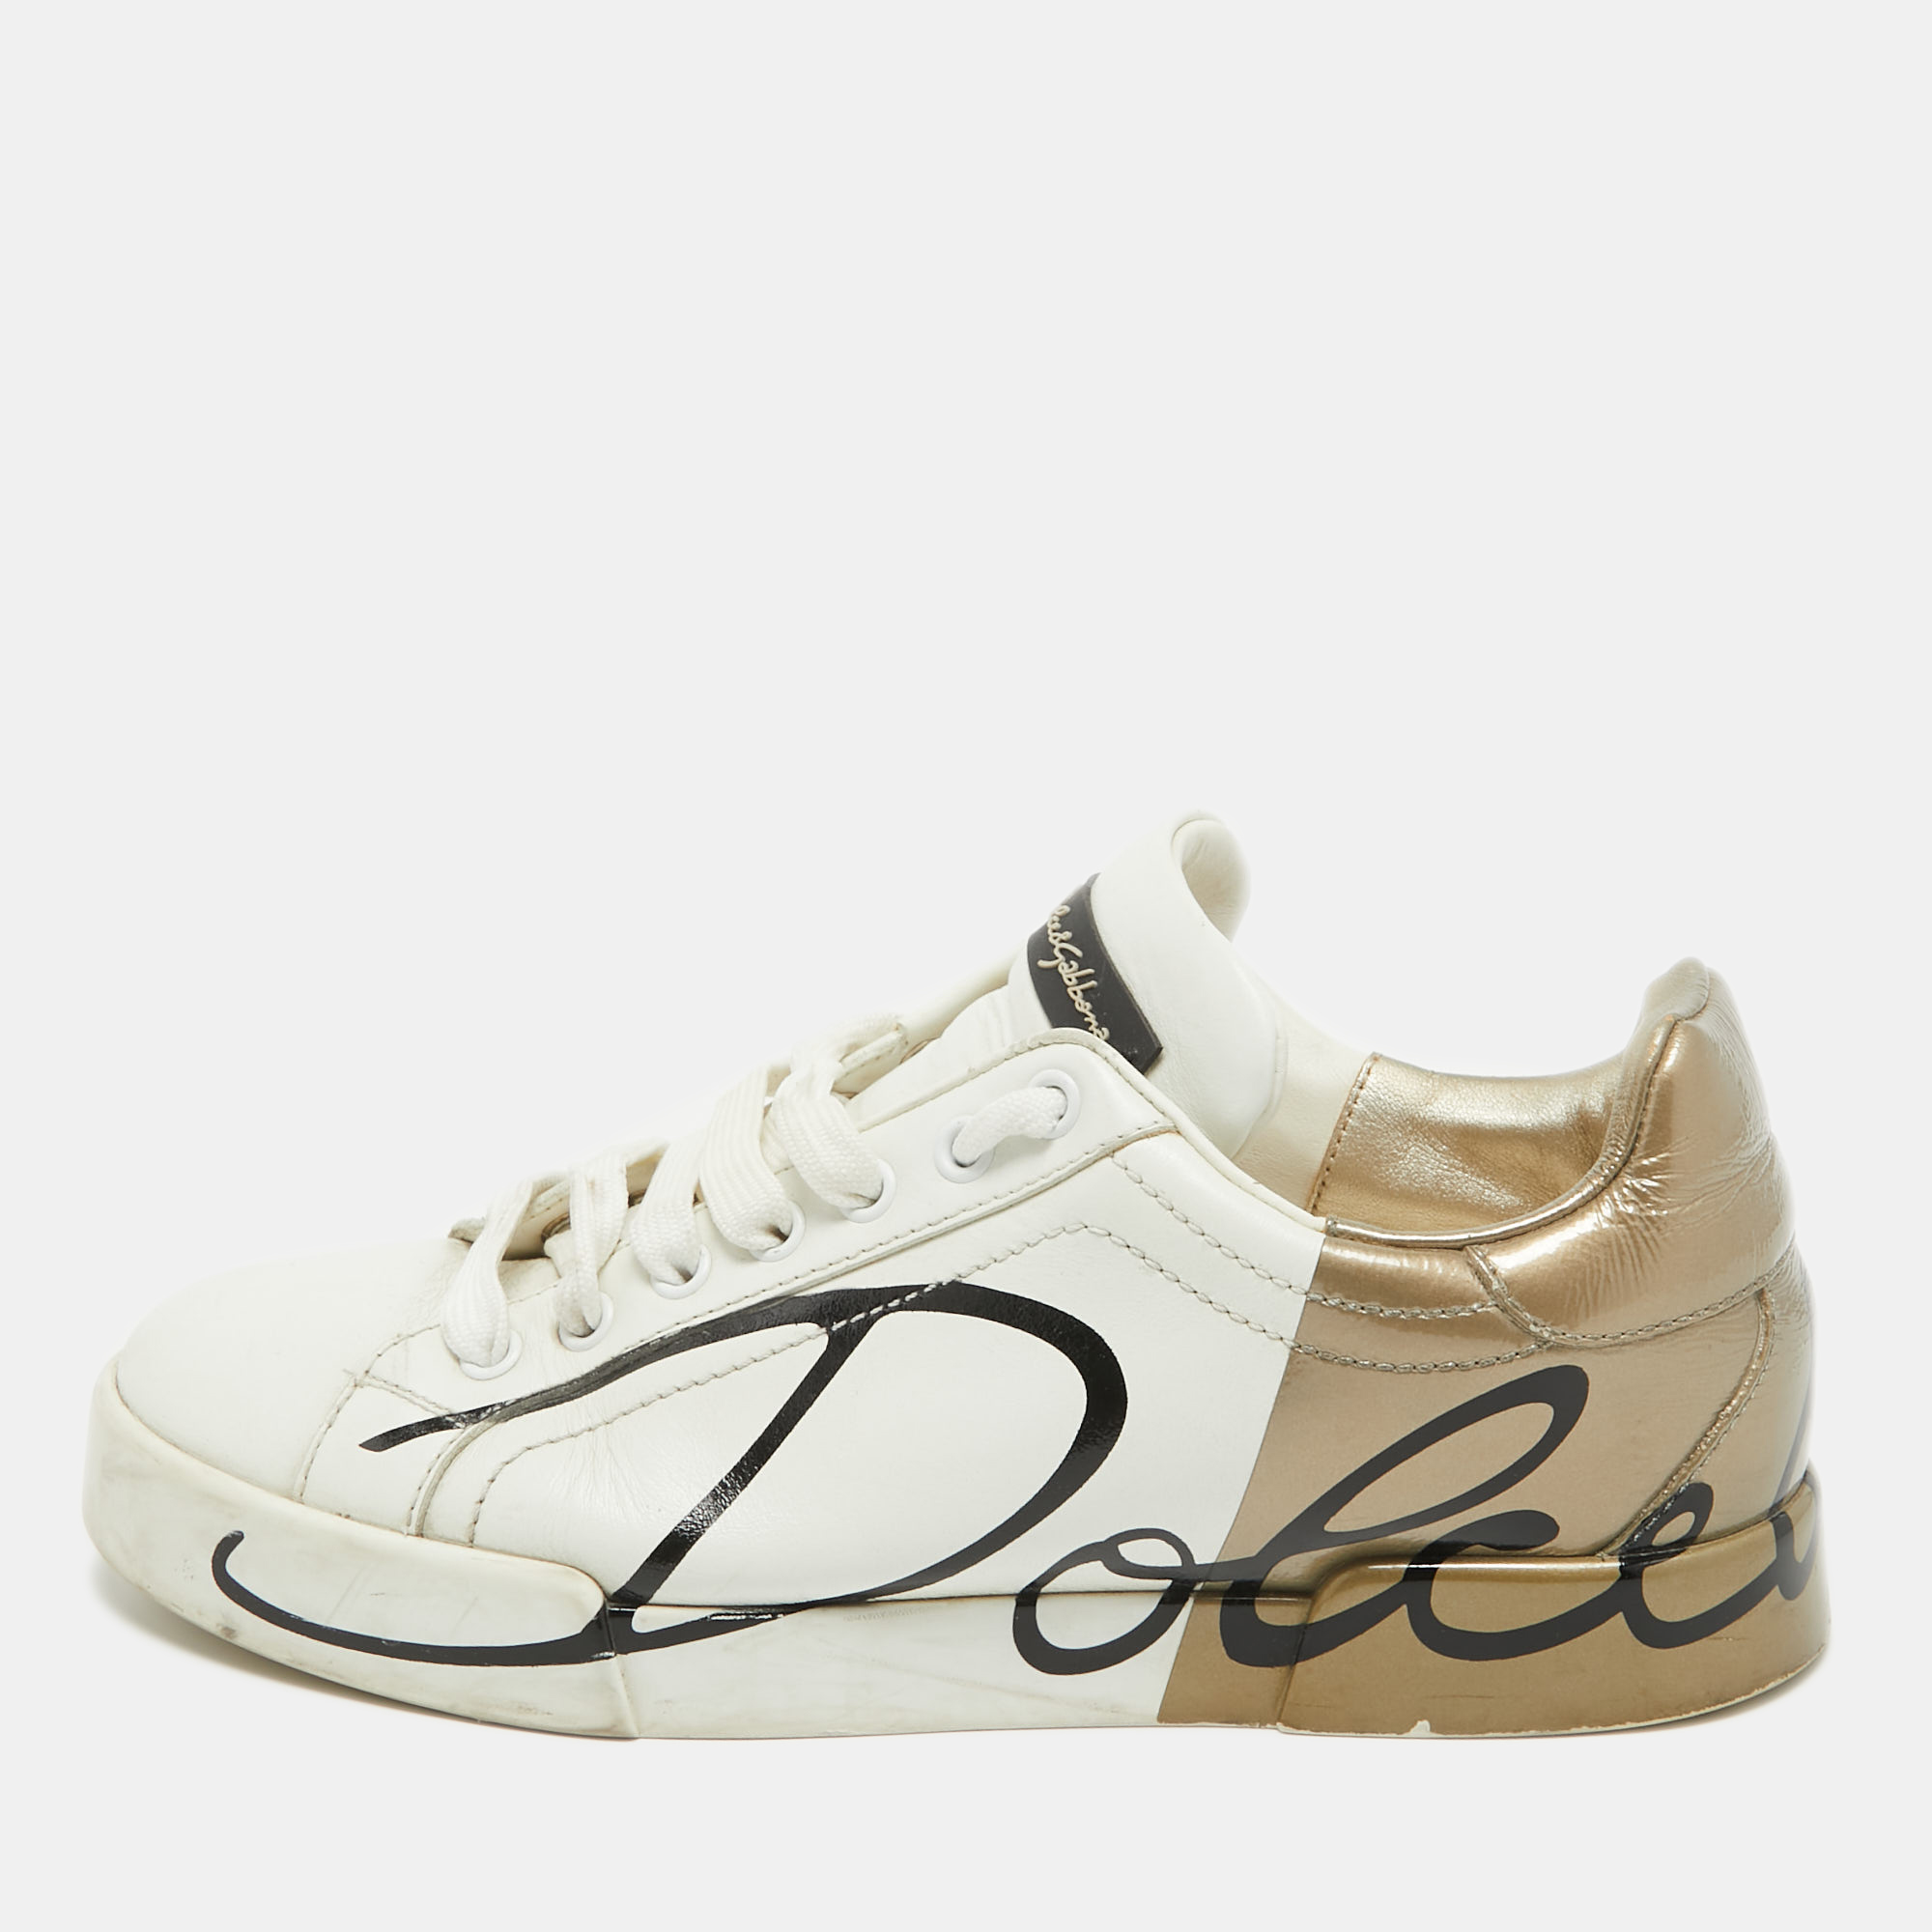 Dolce & gabbana white/gold leather and patent logo print portofino sneakers size 38.5